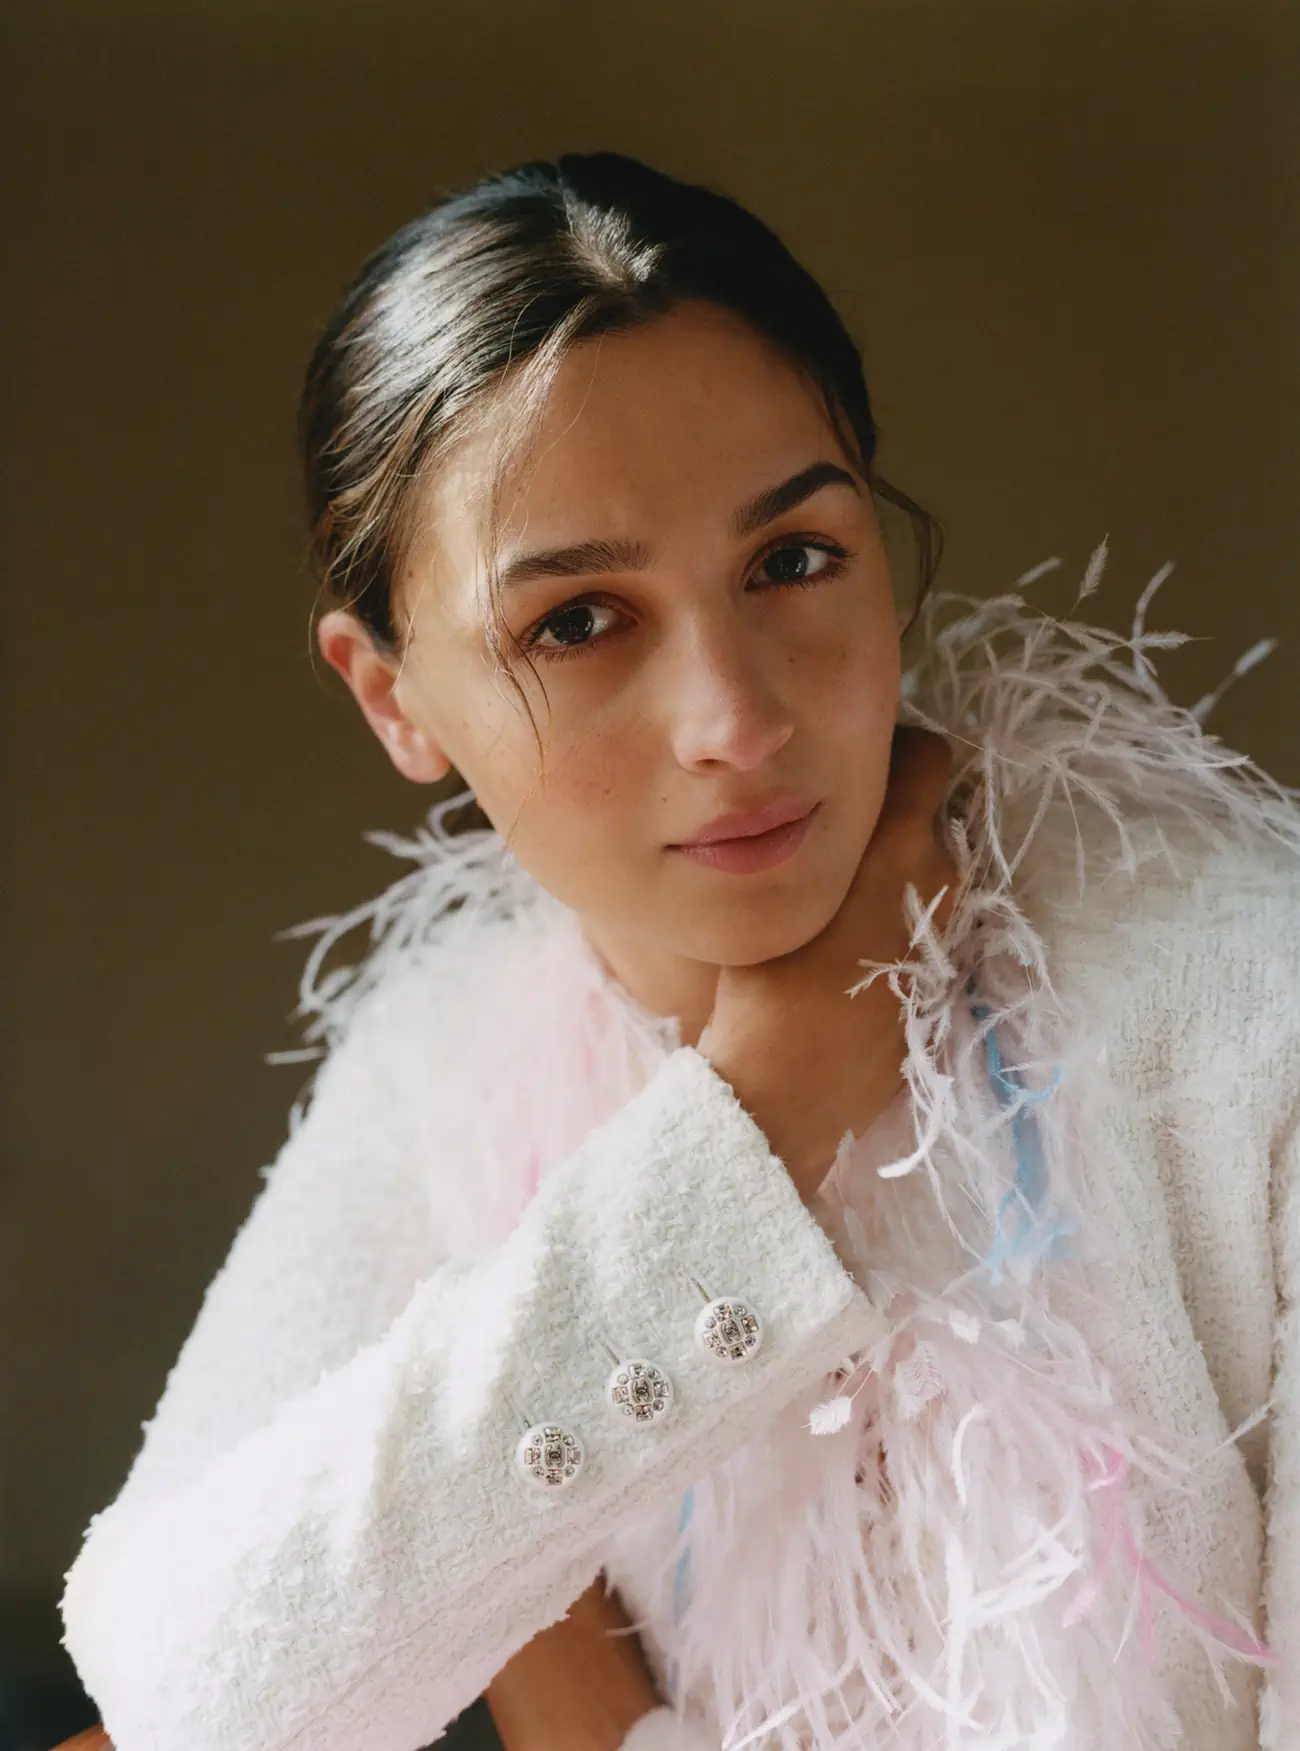 Alia Bhatt covers Vogue India May/June 2023 by Vivek Vadoliya